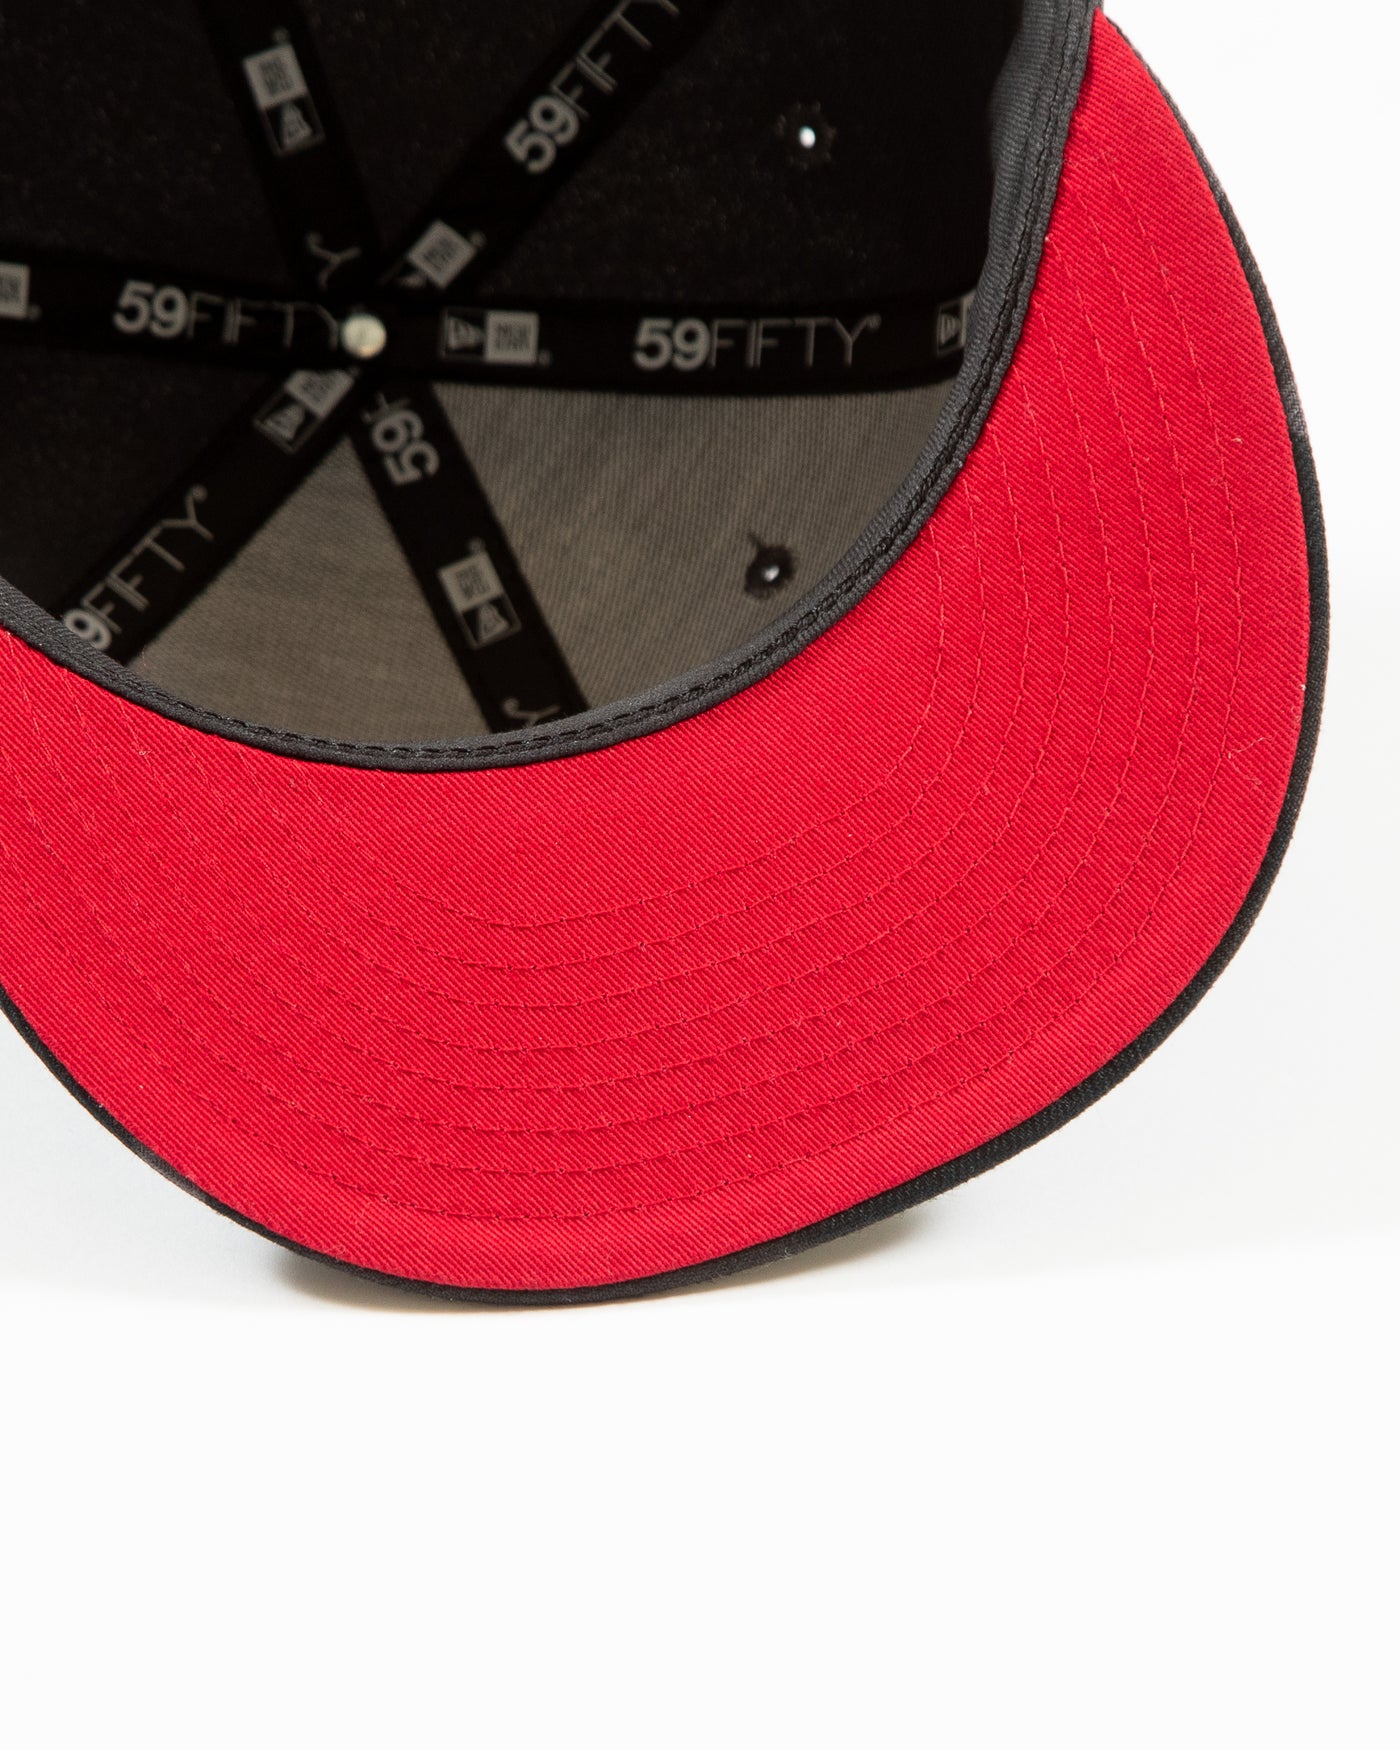 New Era 9 Fifty Chicago Blackhawks Snapback Hat Rare Multicolor